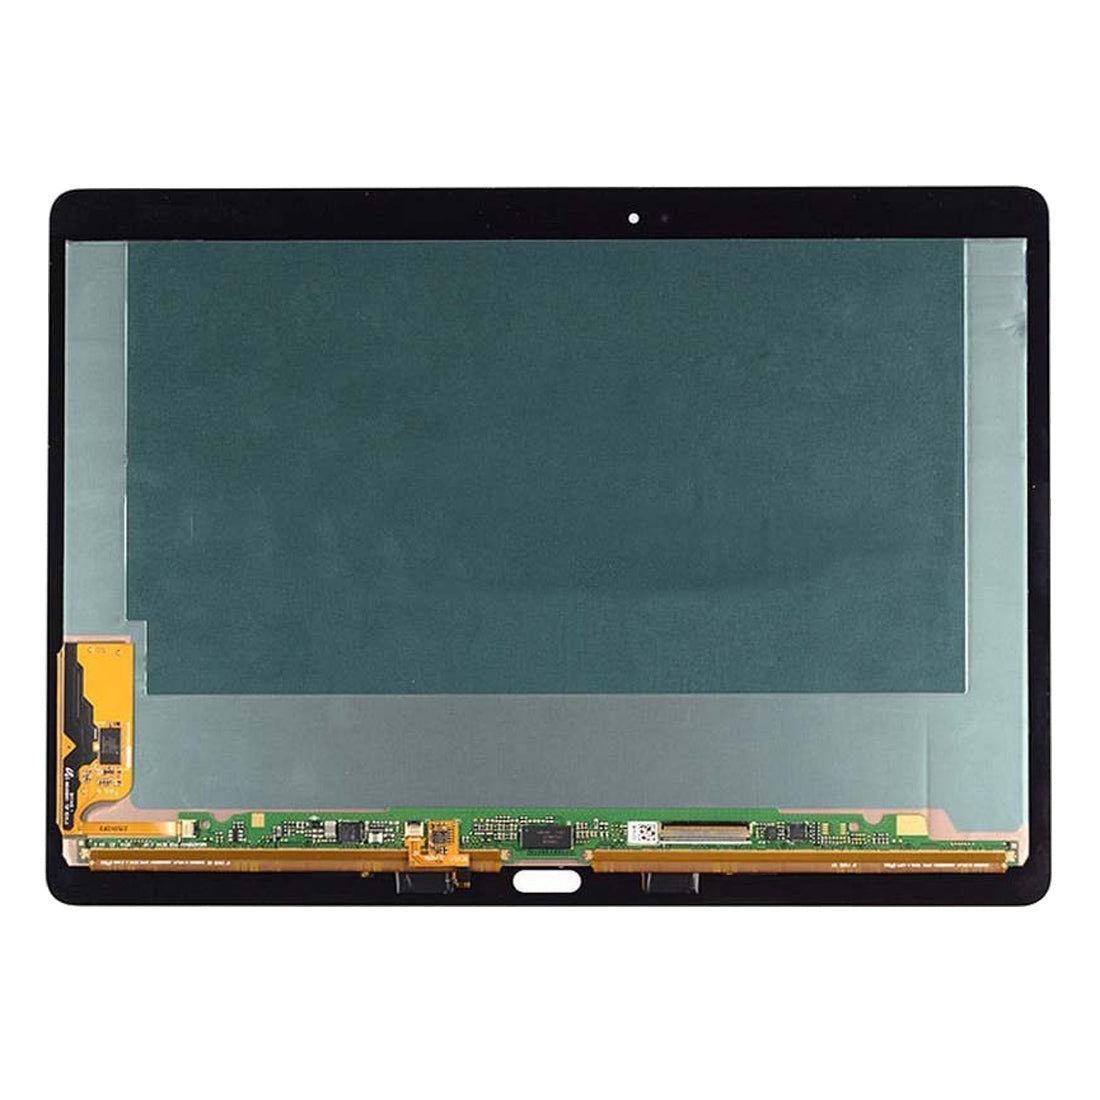 Ecran LCD + Vitre Tactile Samsung Galaxy Tab S 10.5 T805 Marron